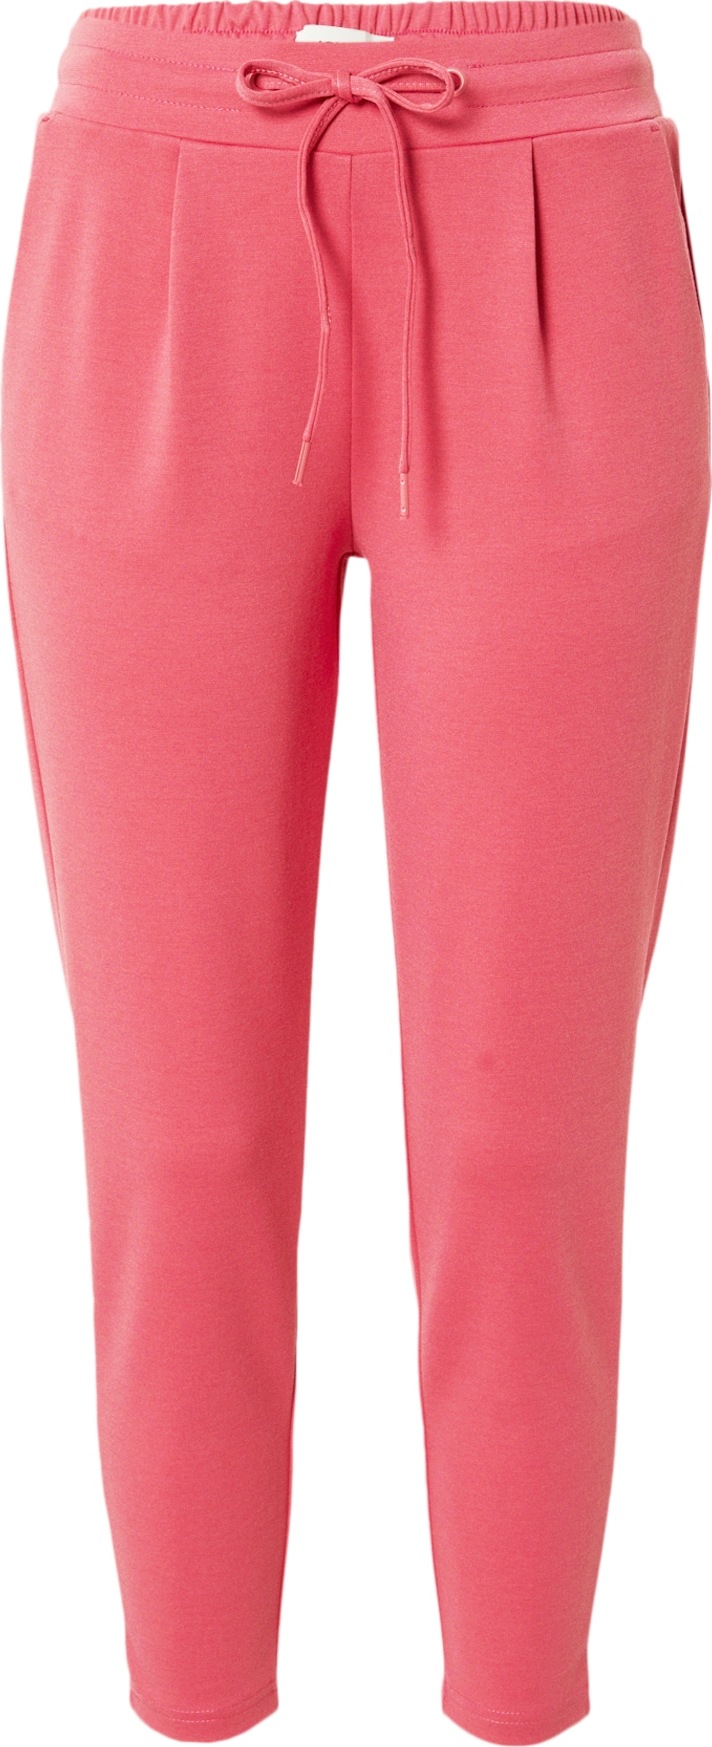 Kalhoty 'KATE' Ichi pink